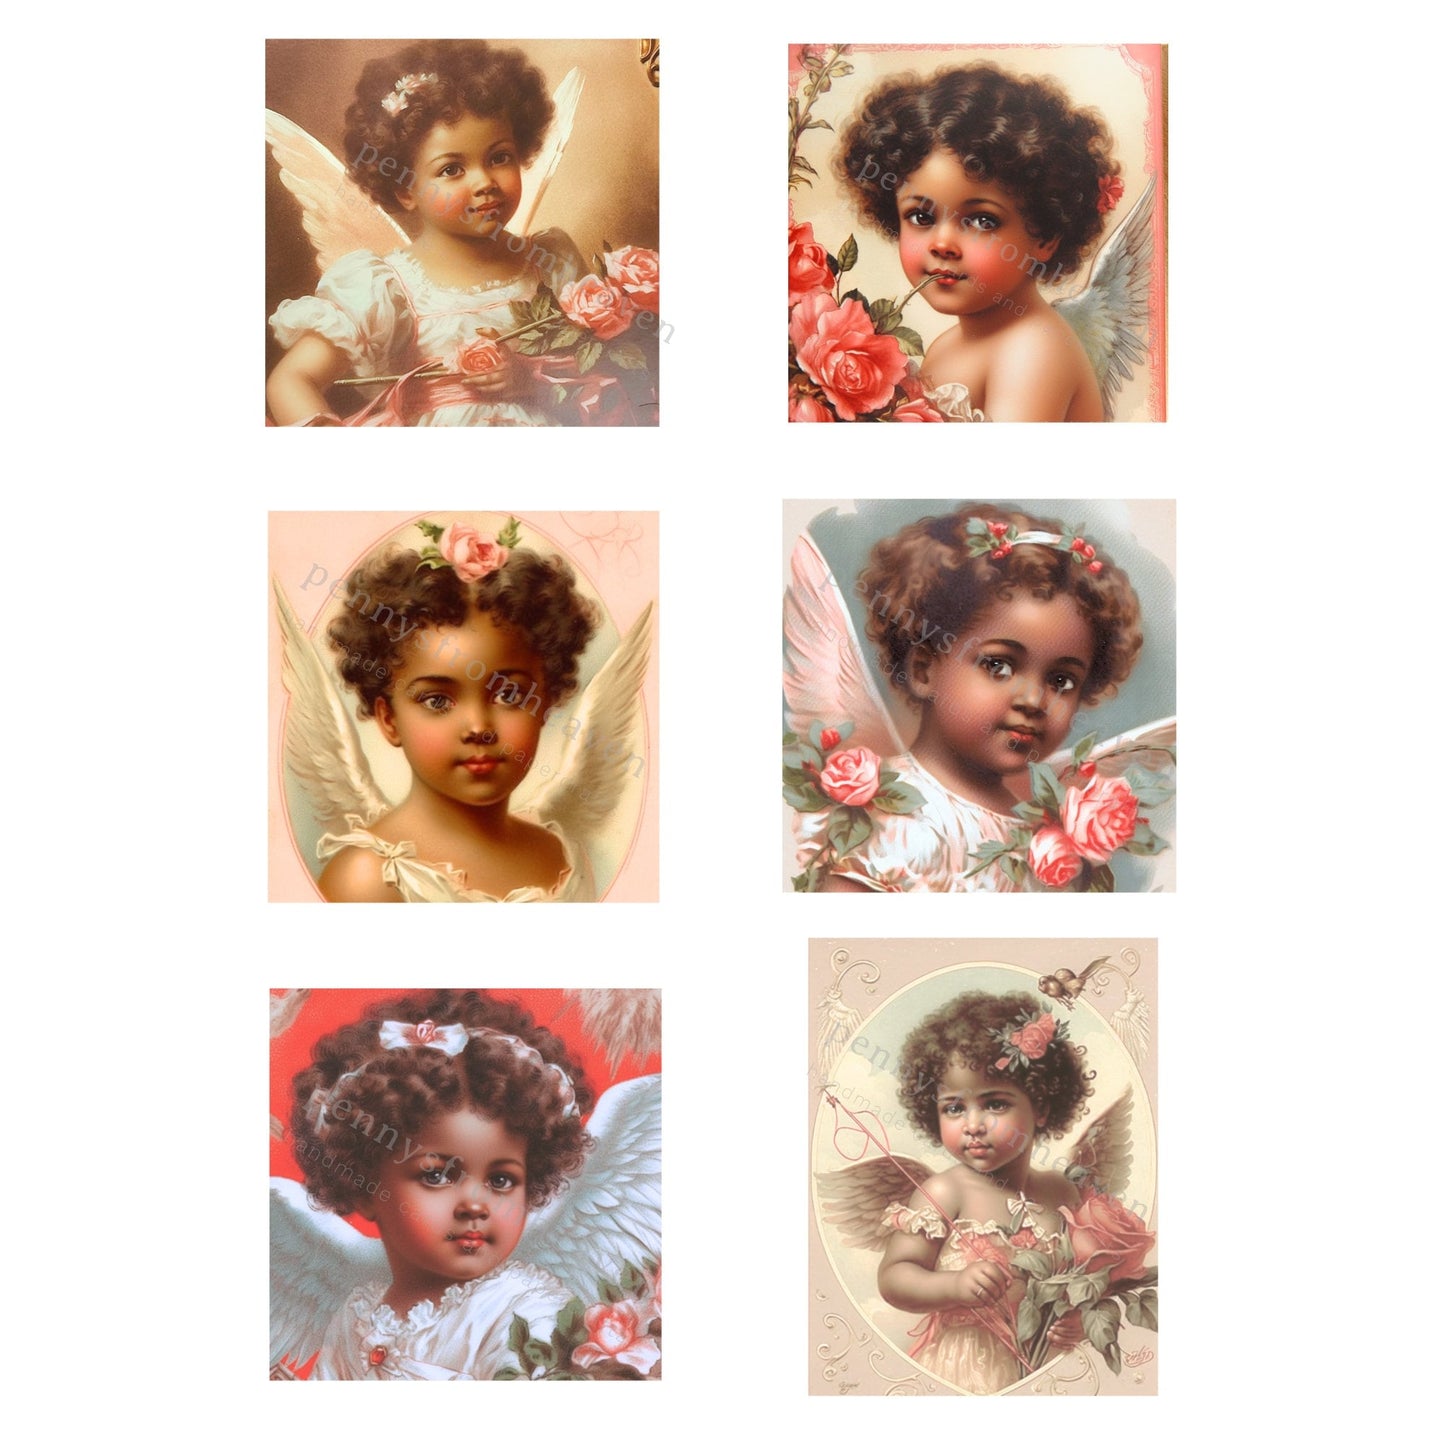 Black Ephemera Vintage Cupids, African American Angel Cherubs for Scrapbooking, Junk Journaling, Art Project Decoupage, Diverse Image Prints